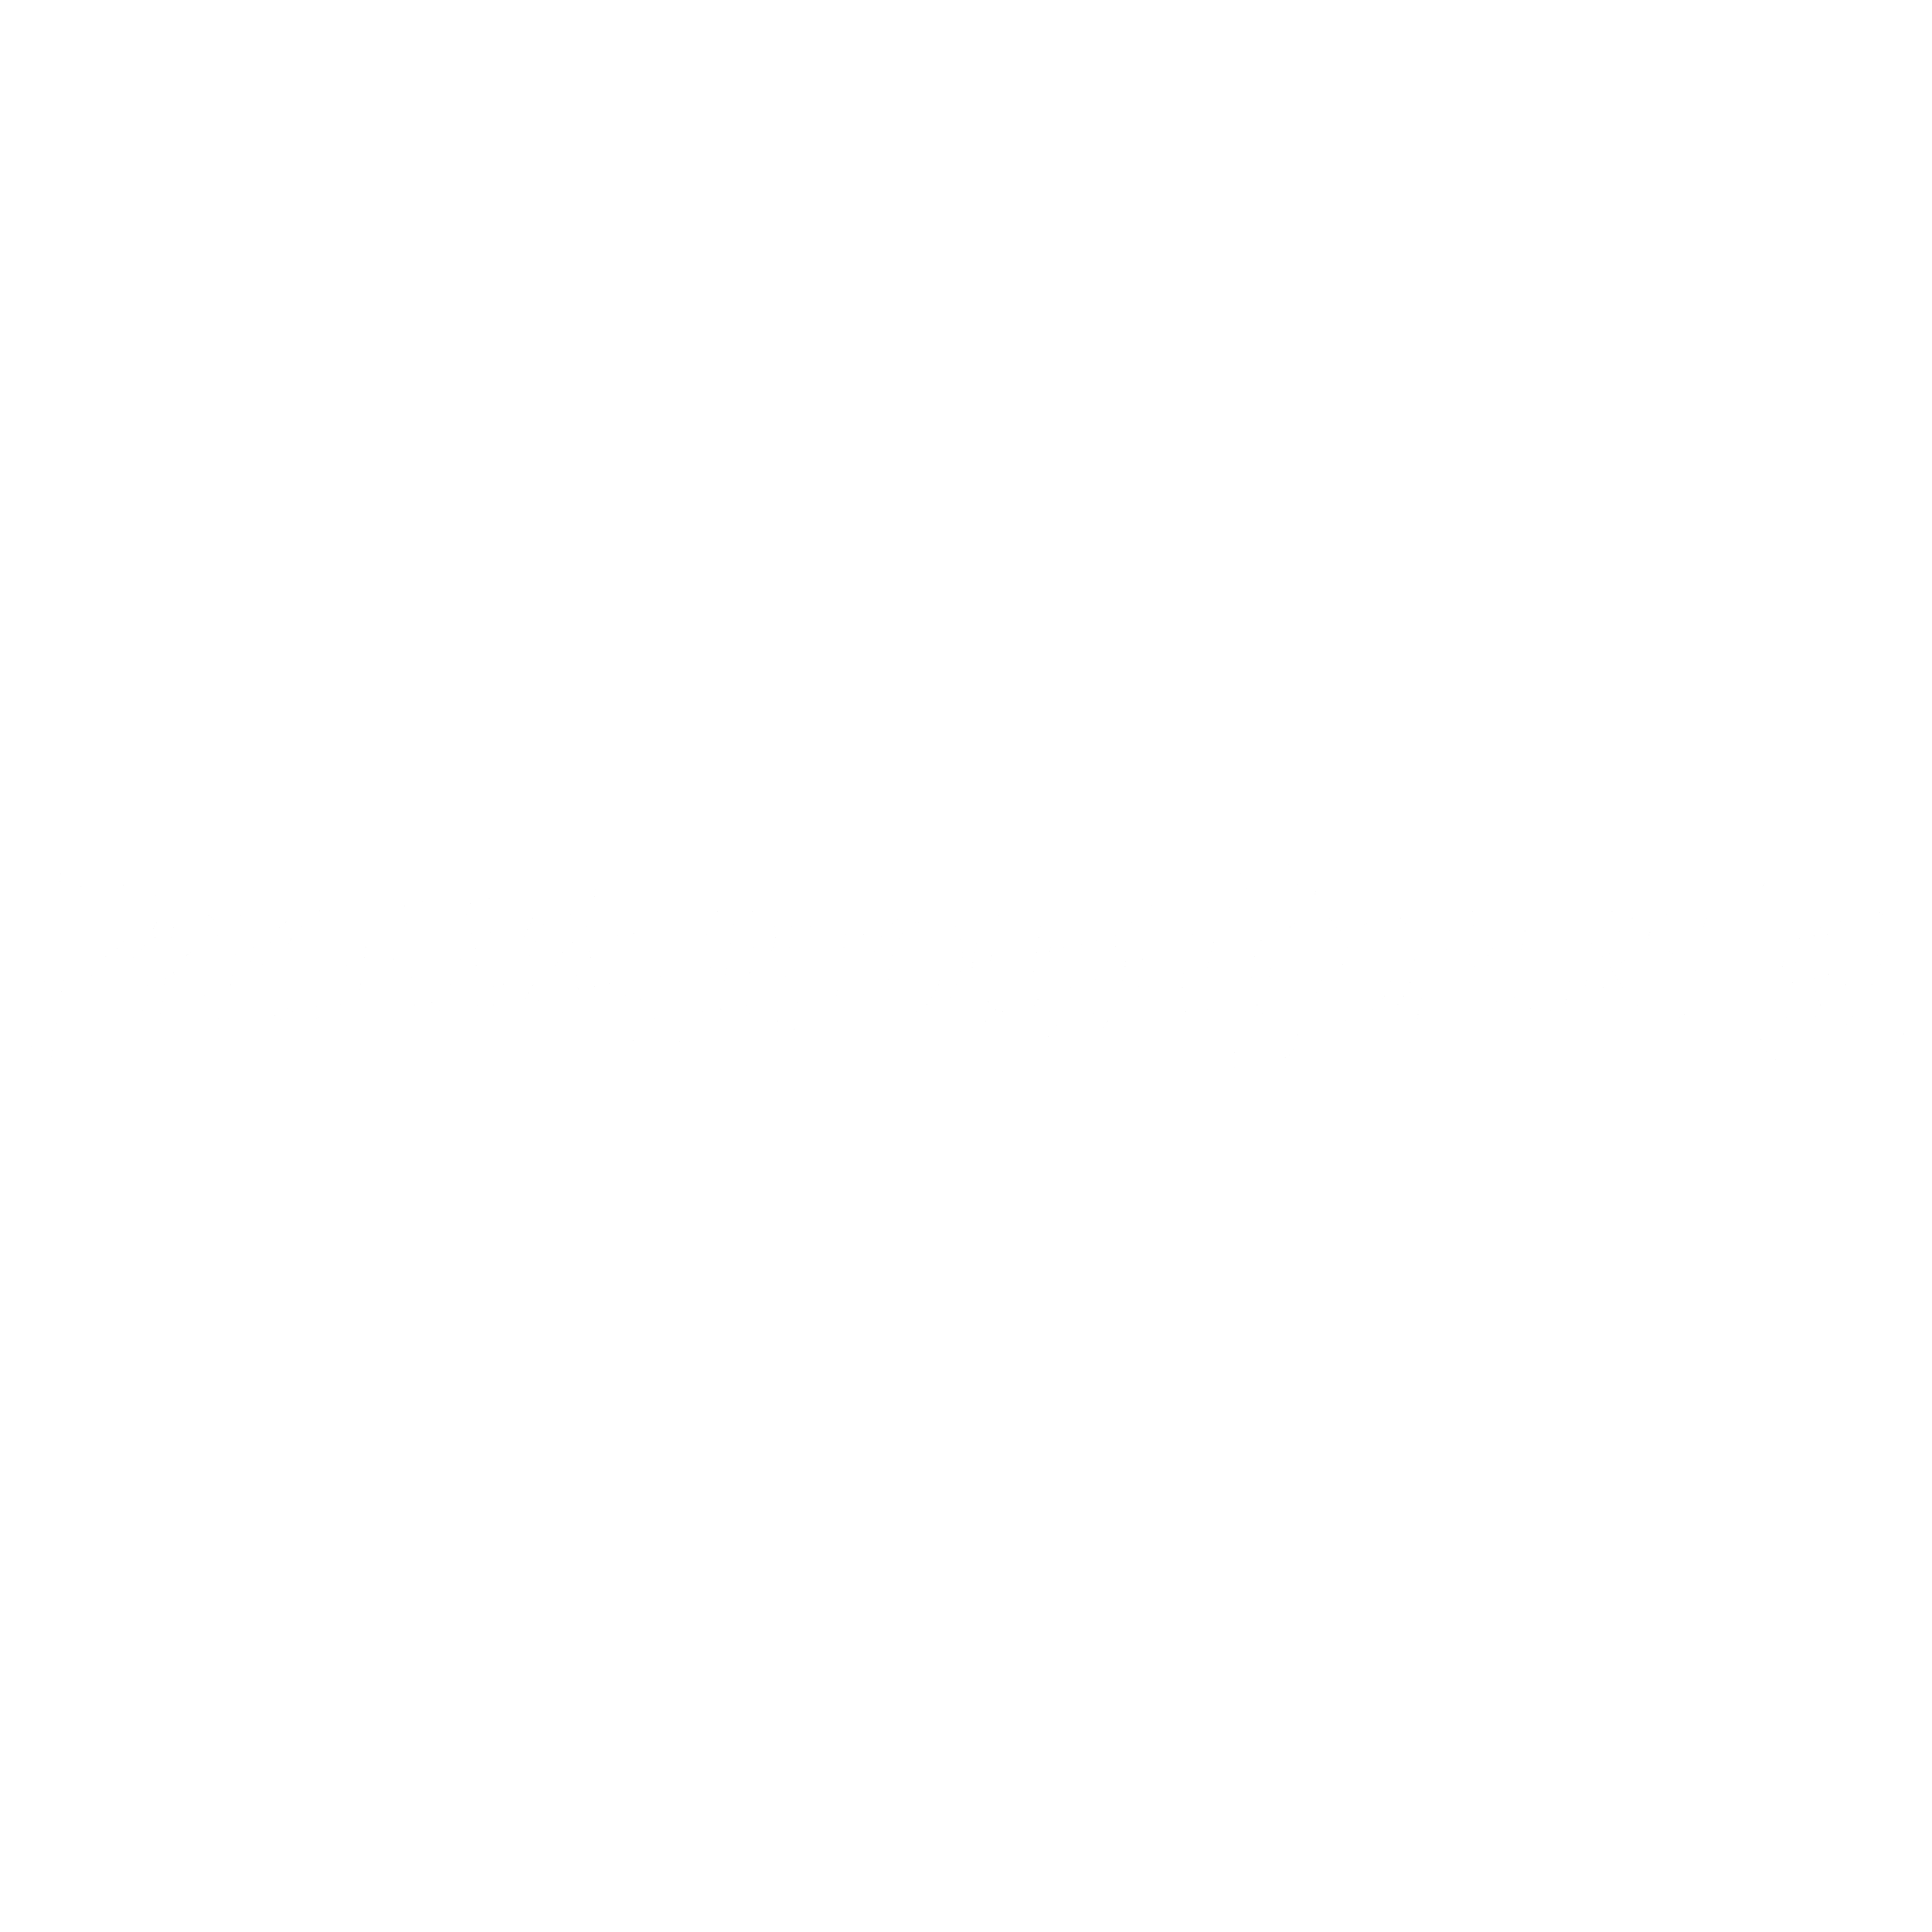 PricewaterhouseCoopers Logo - PricewaterhouseCoopers Logo PNG Transparent & SVG Vector